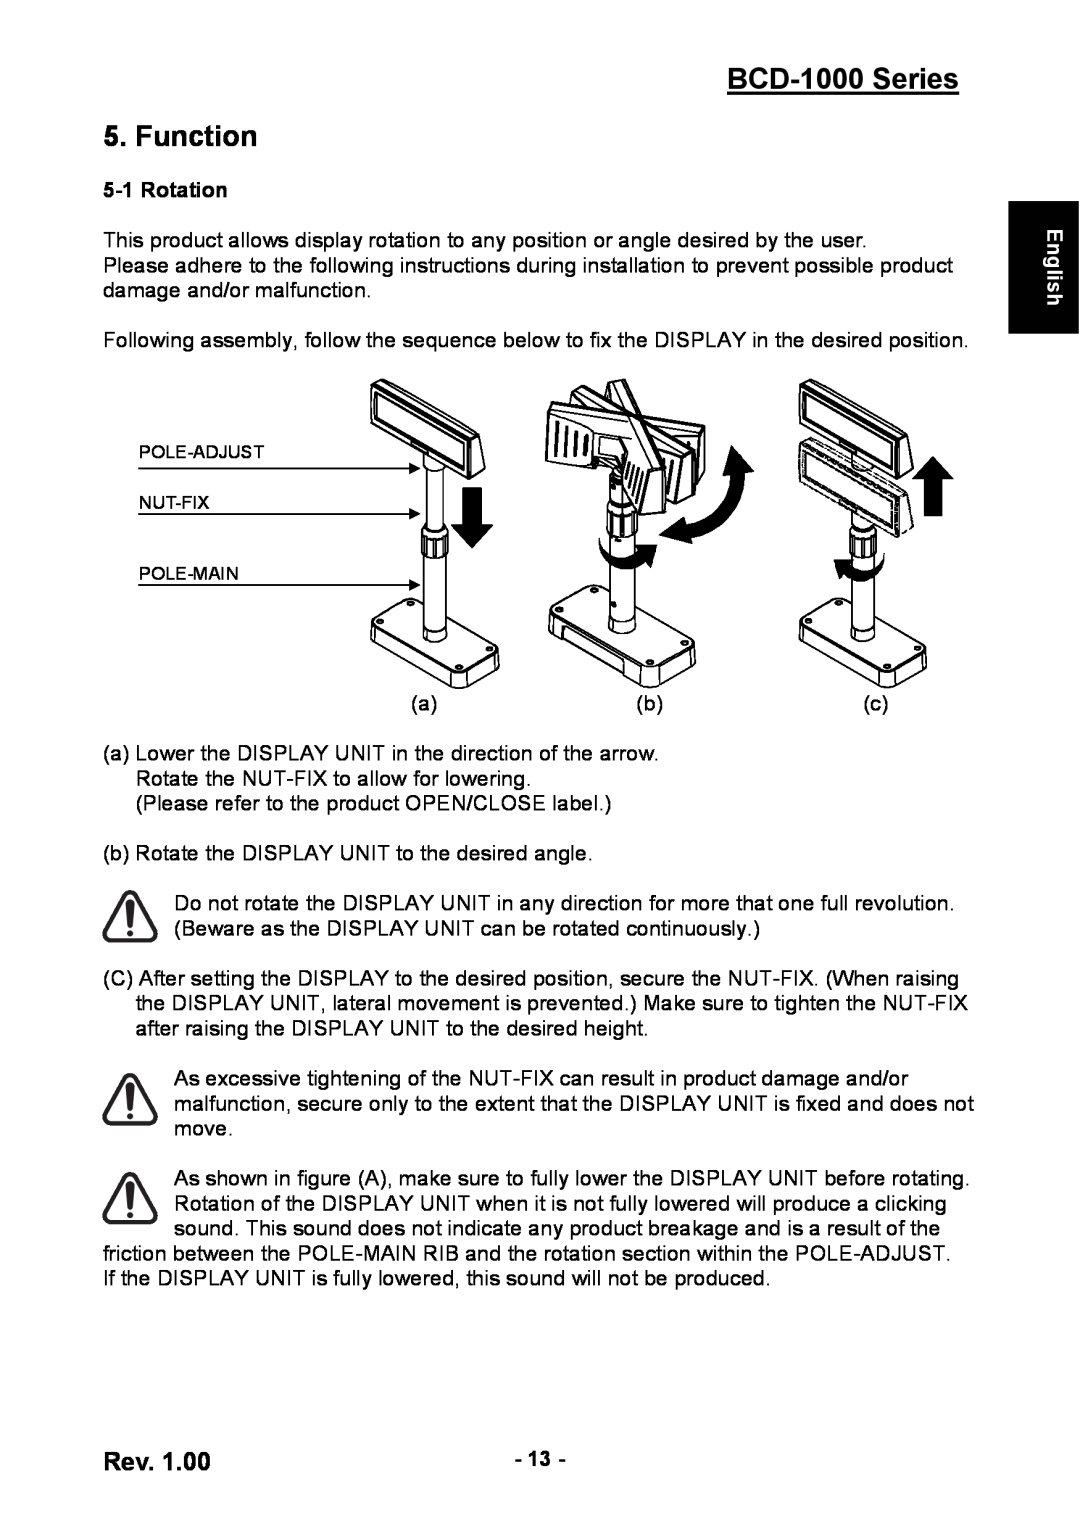 Samsung user manual BCD-1000 Series 5. Function, Rotation, English 